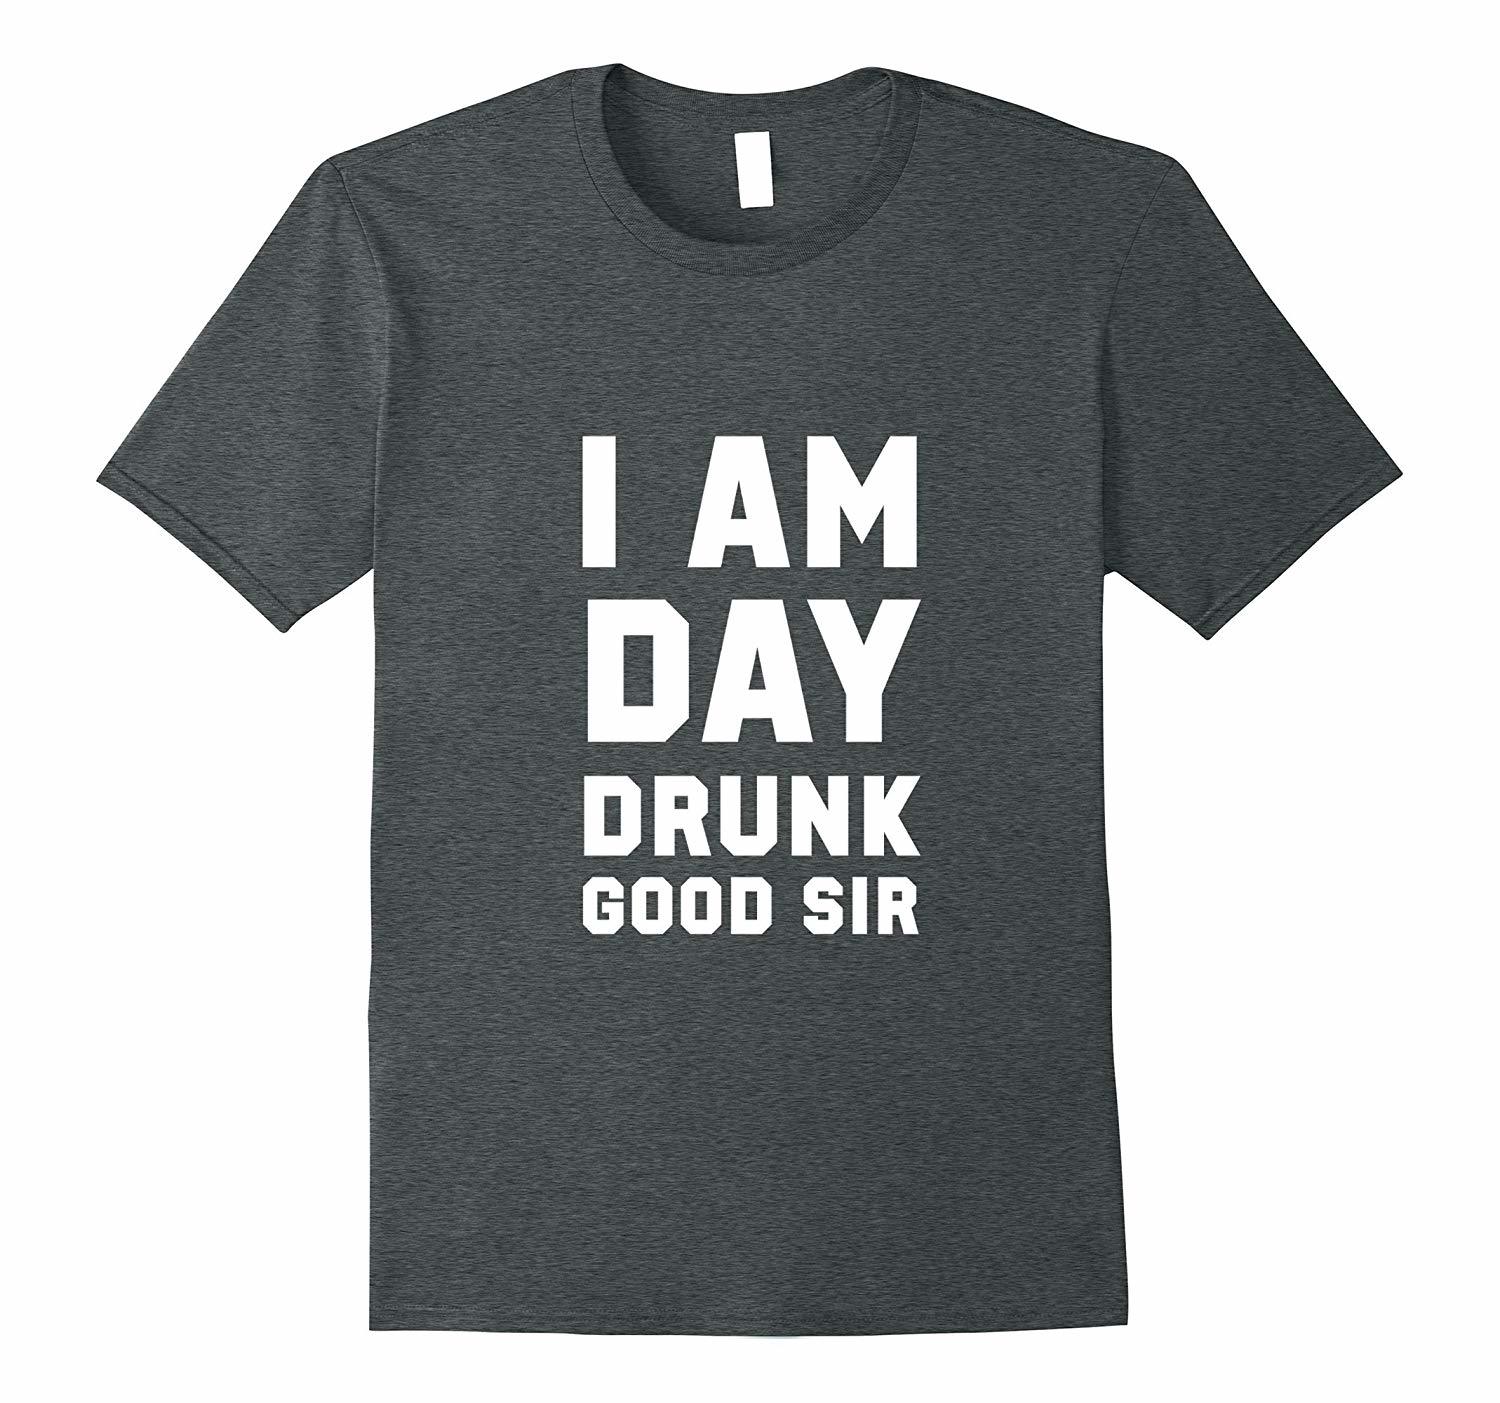 New Shirts - I am day drunk good sir Shirts Men - T-Shirts